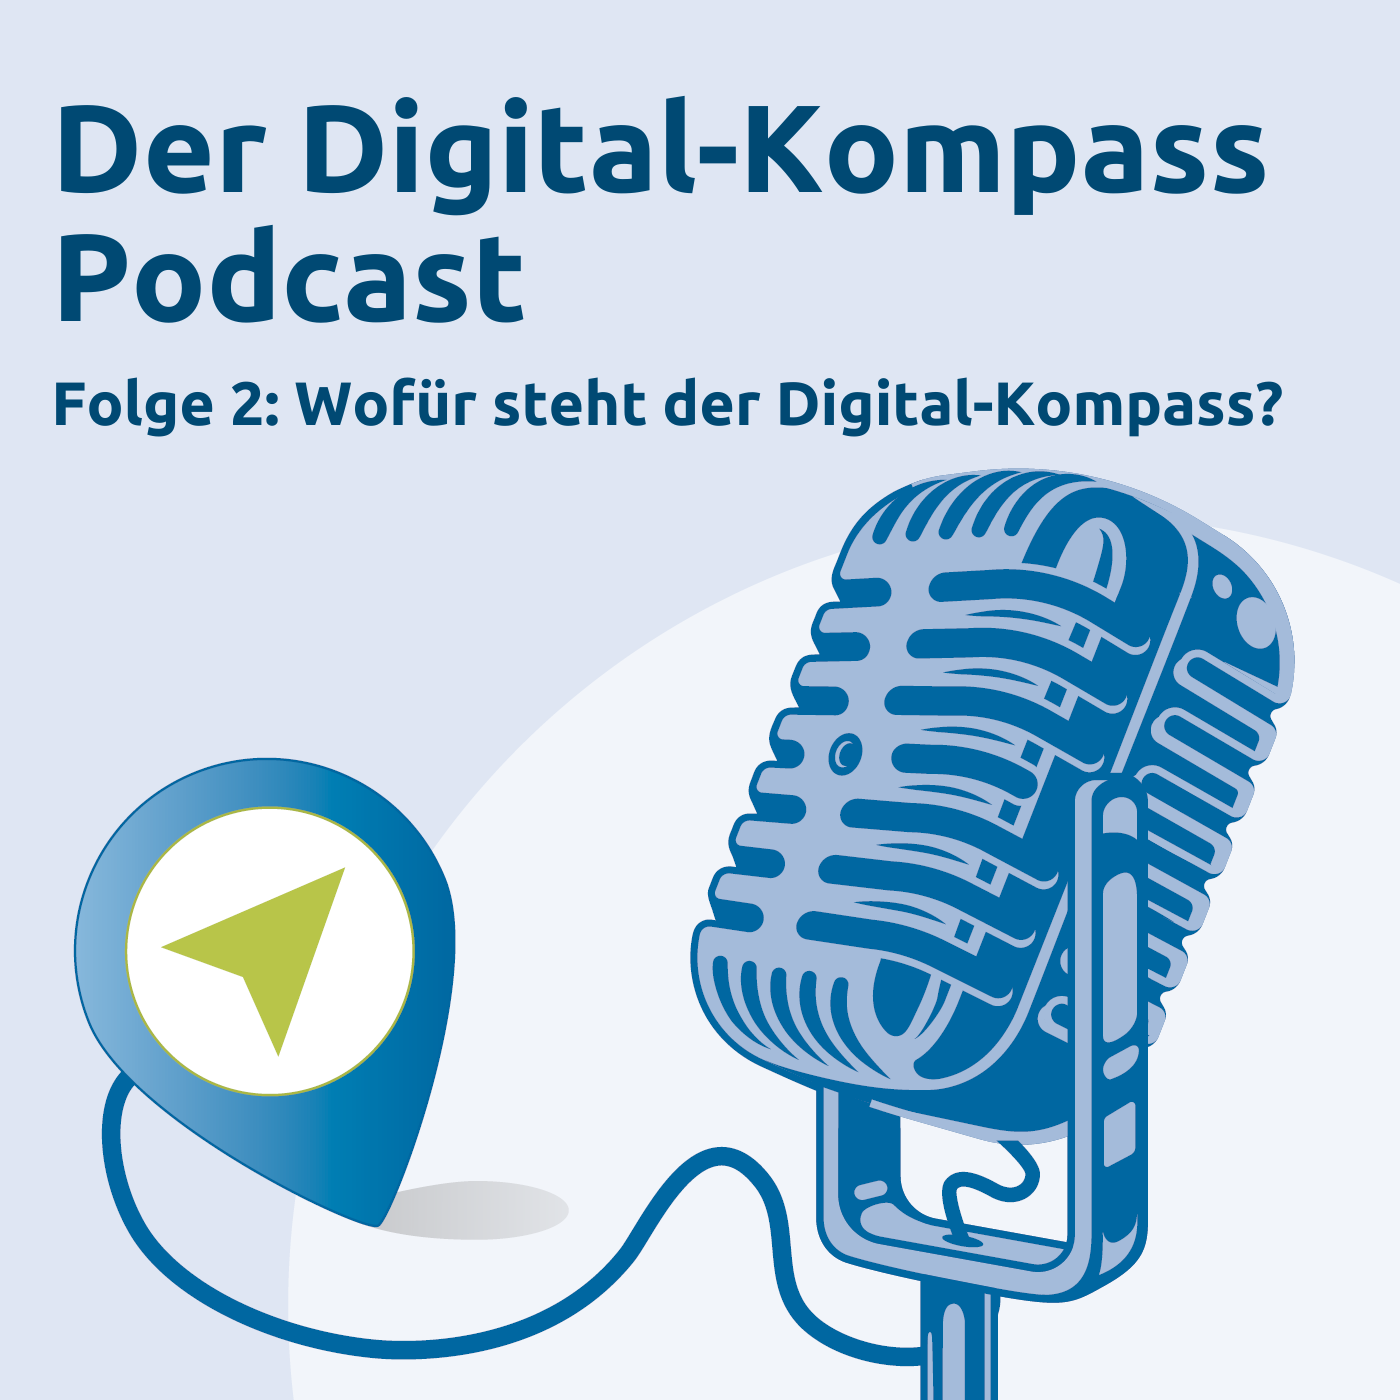 Digital-Kompass Podcast. Folge 2: Wofür steht der Digital-Kompass?